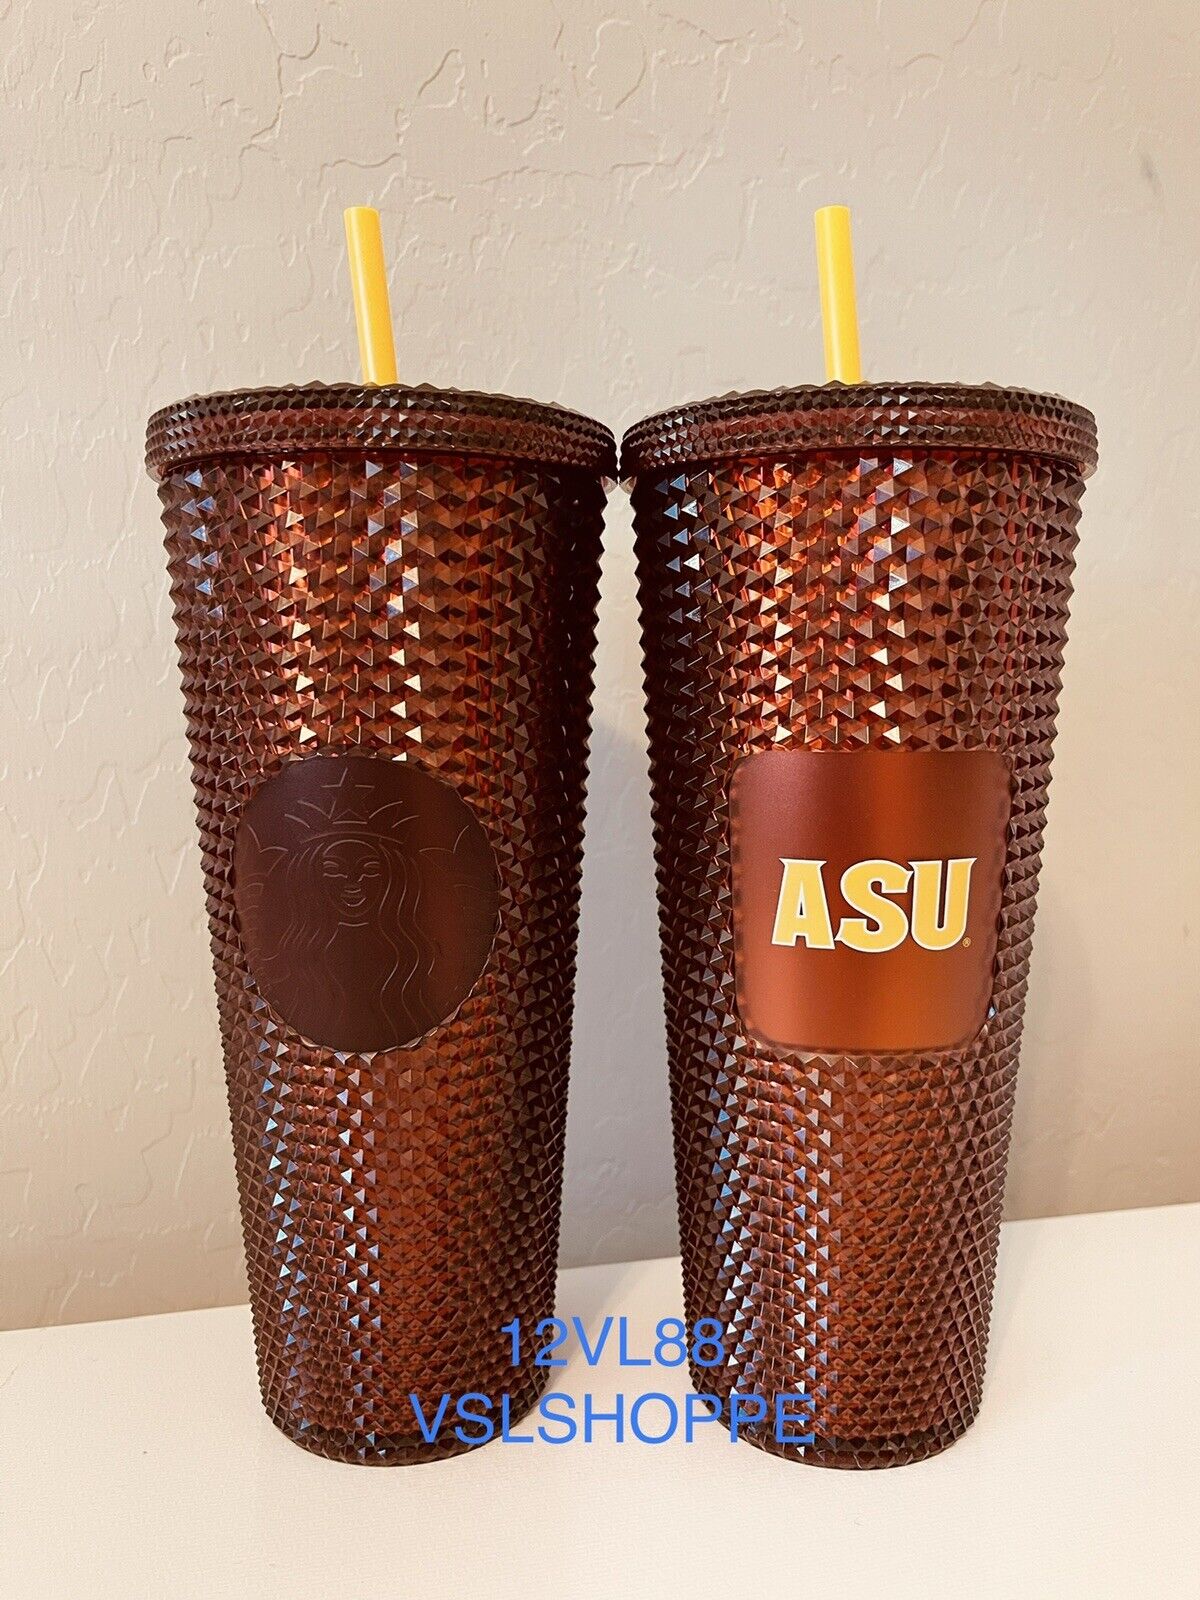 BRAND NEW - Starbucks - Arizona State - ASU - Studded Cold Cup Tumbler - Venti